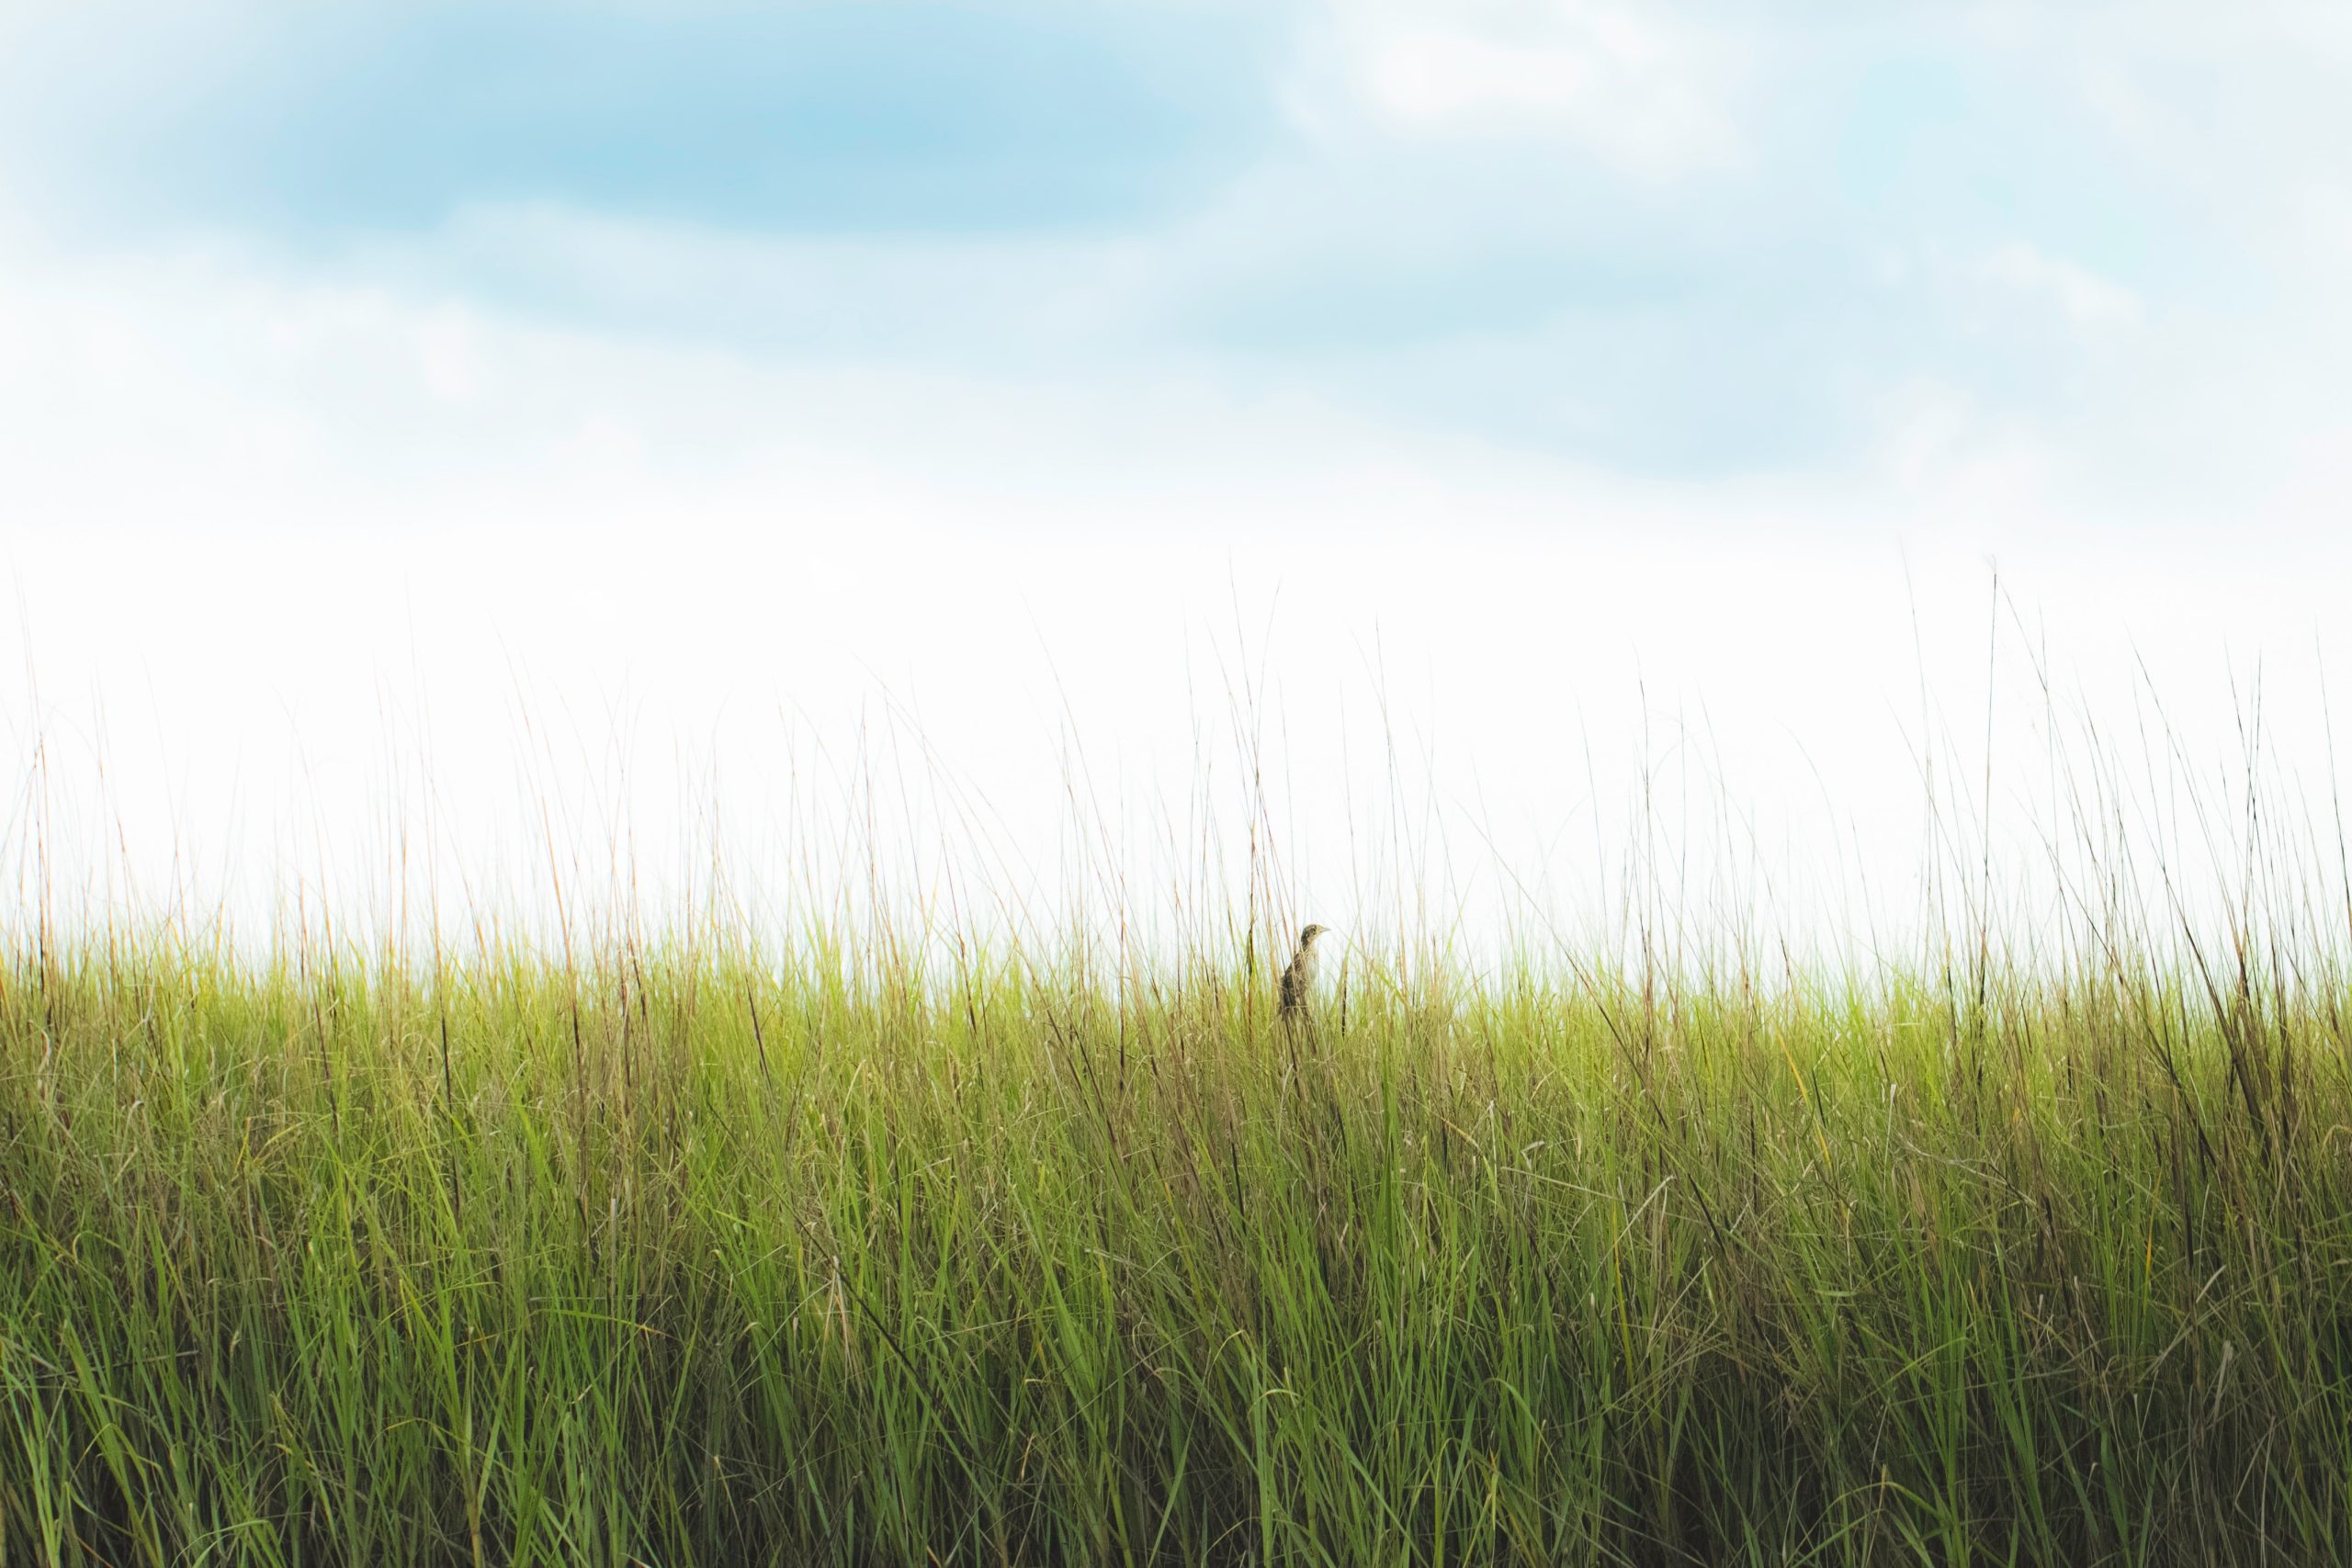 salt marsh in South Carolina with tall grass